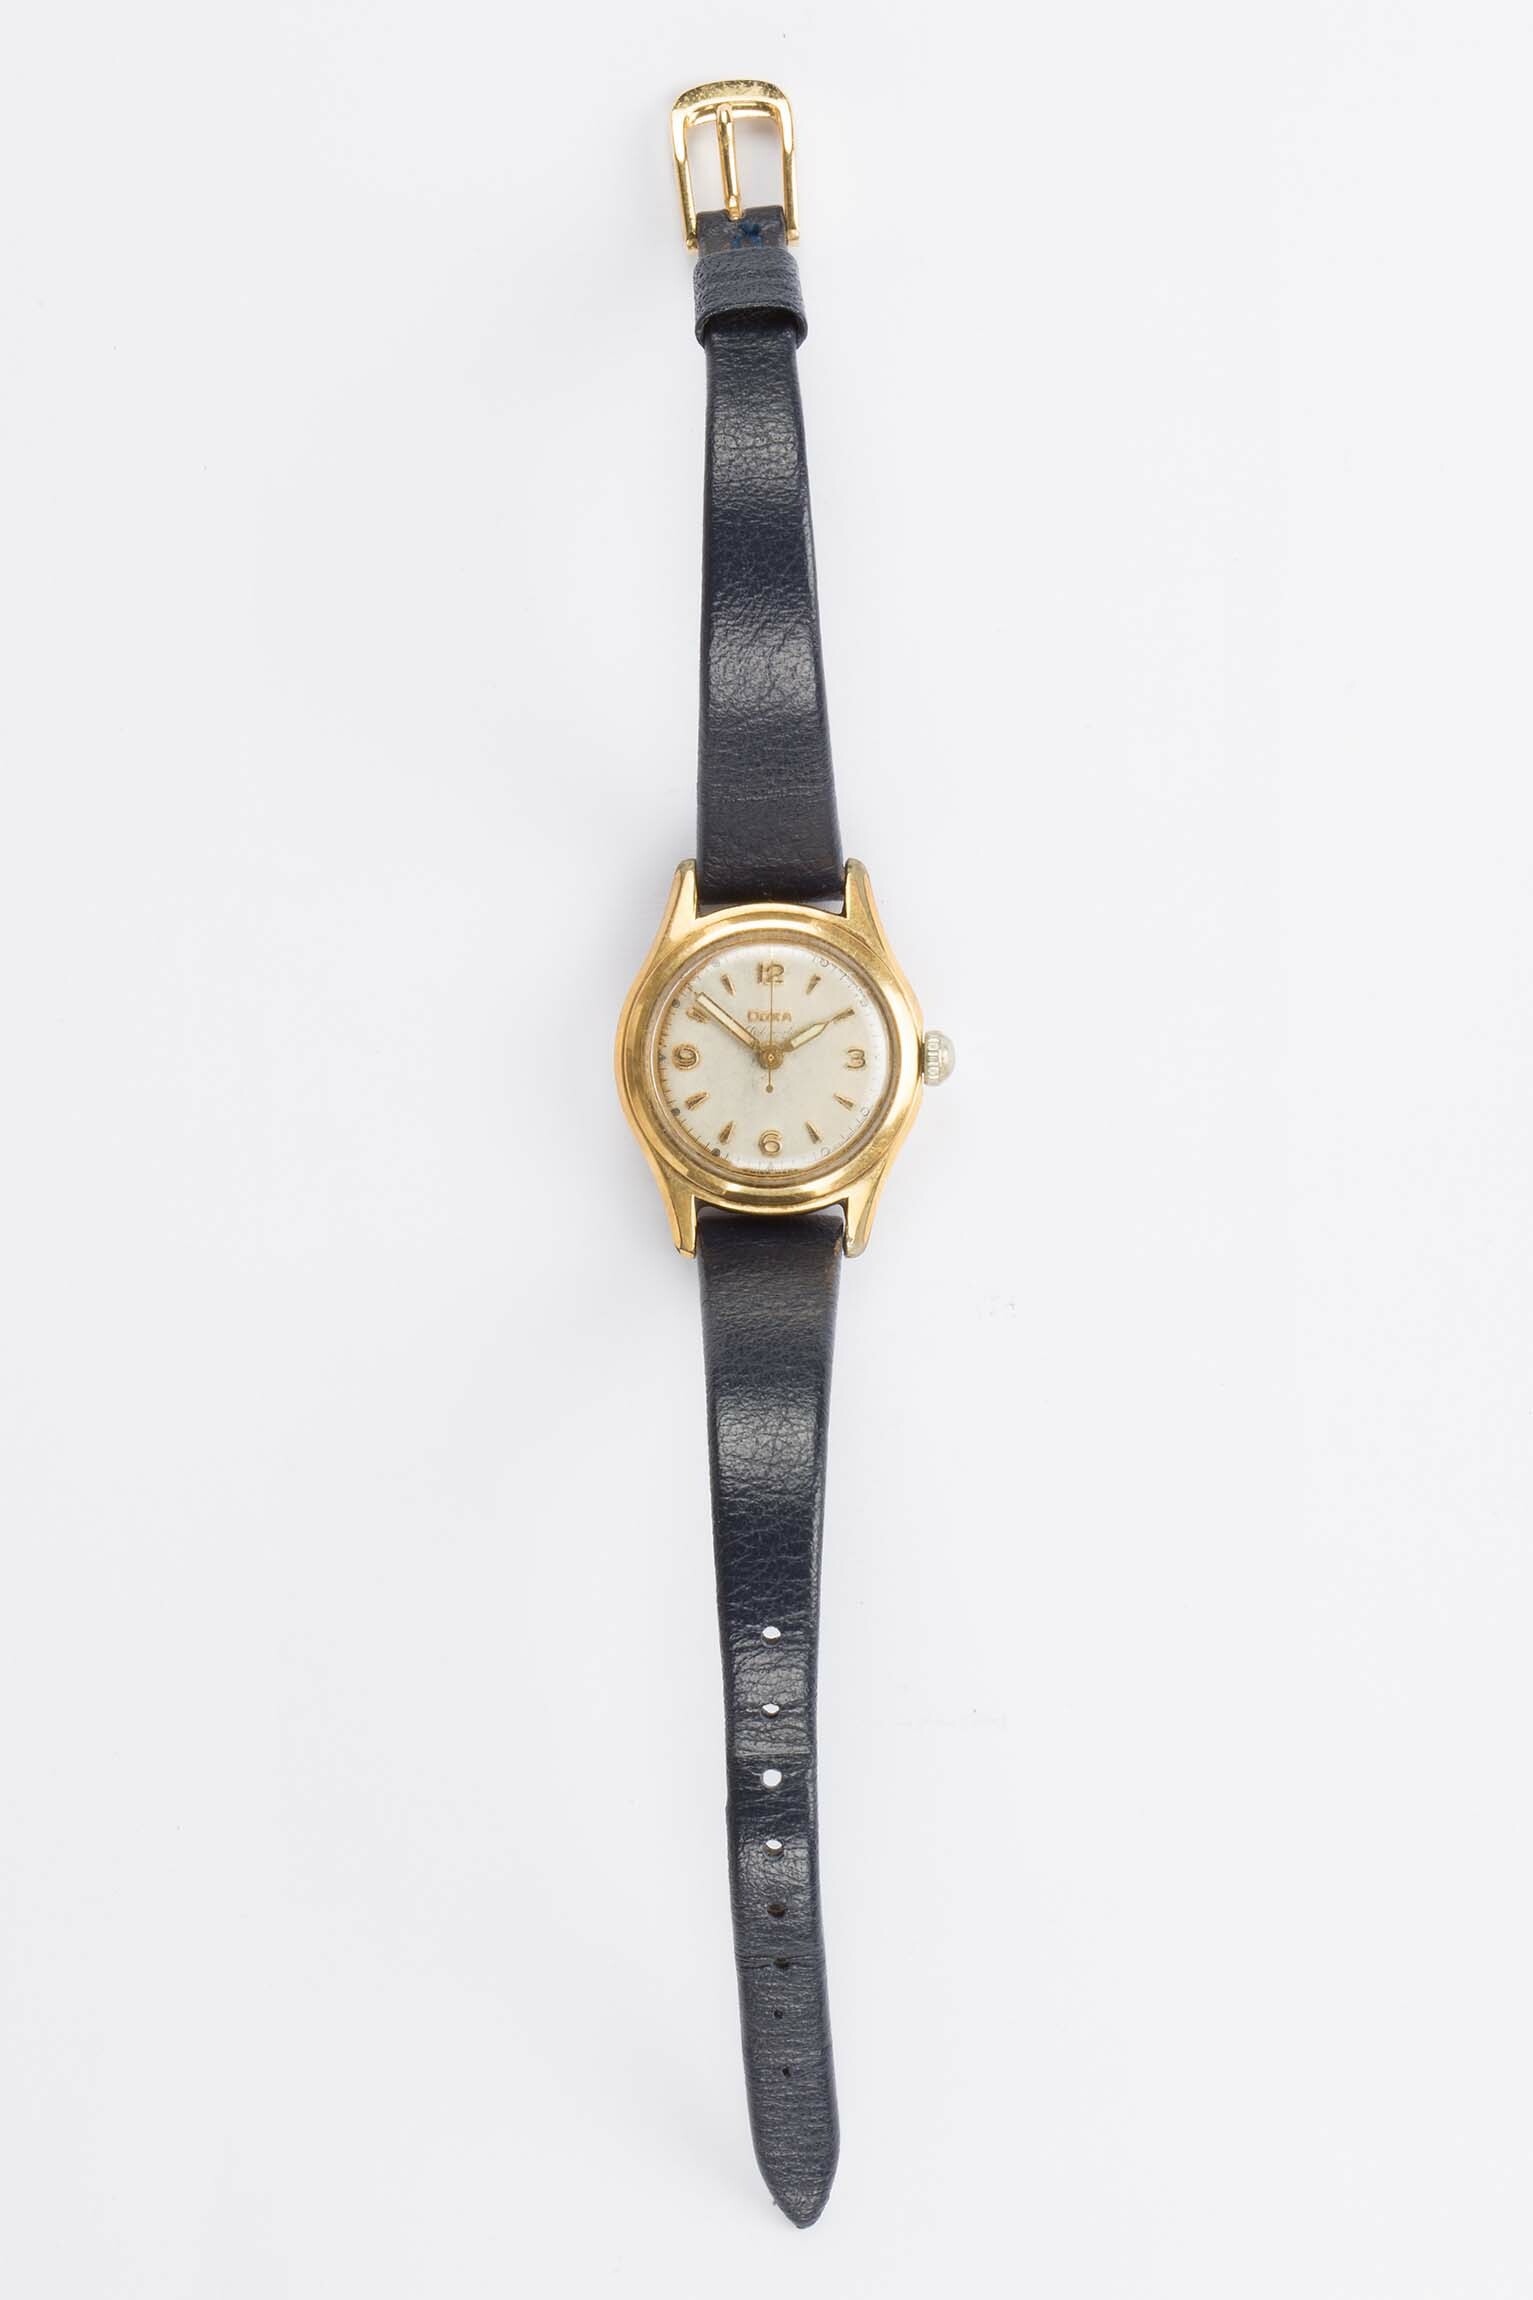 Armbanduhr Doxa Automatic, Le Locle, um 1950 (Deutsches Uhrenmuseum CC BY-SA)